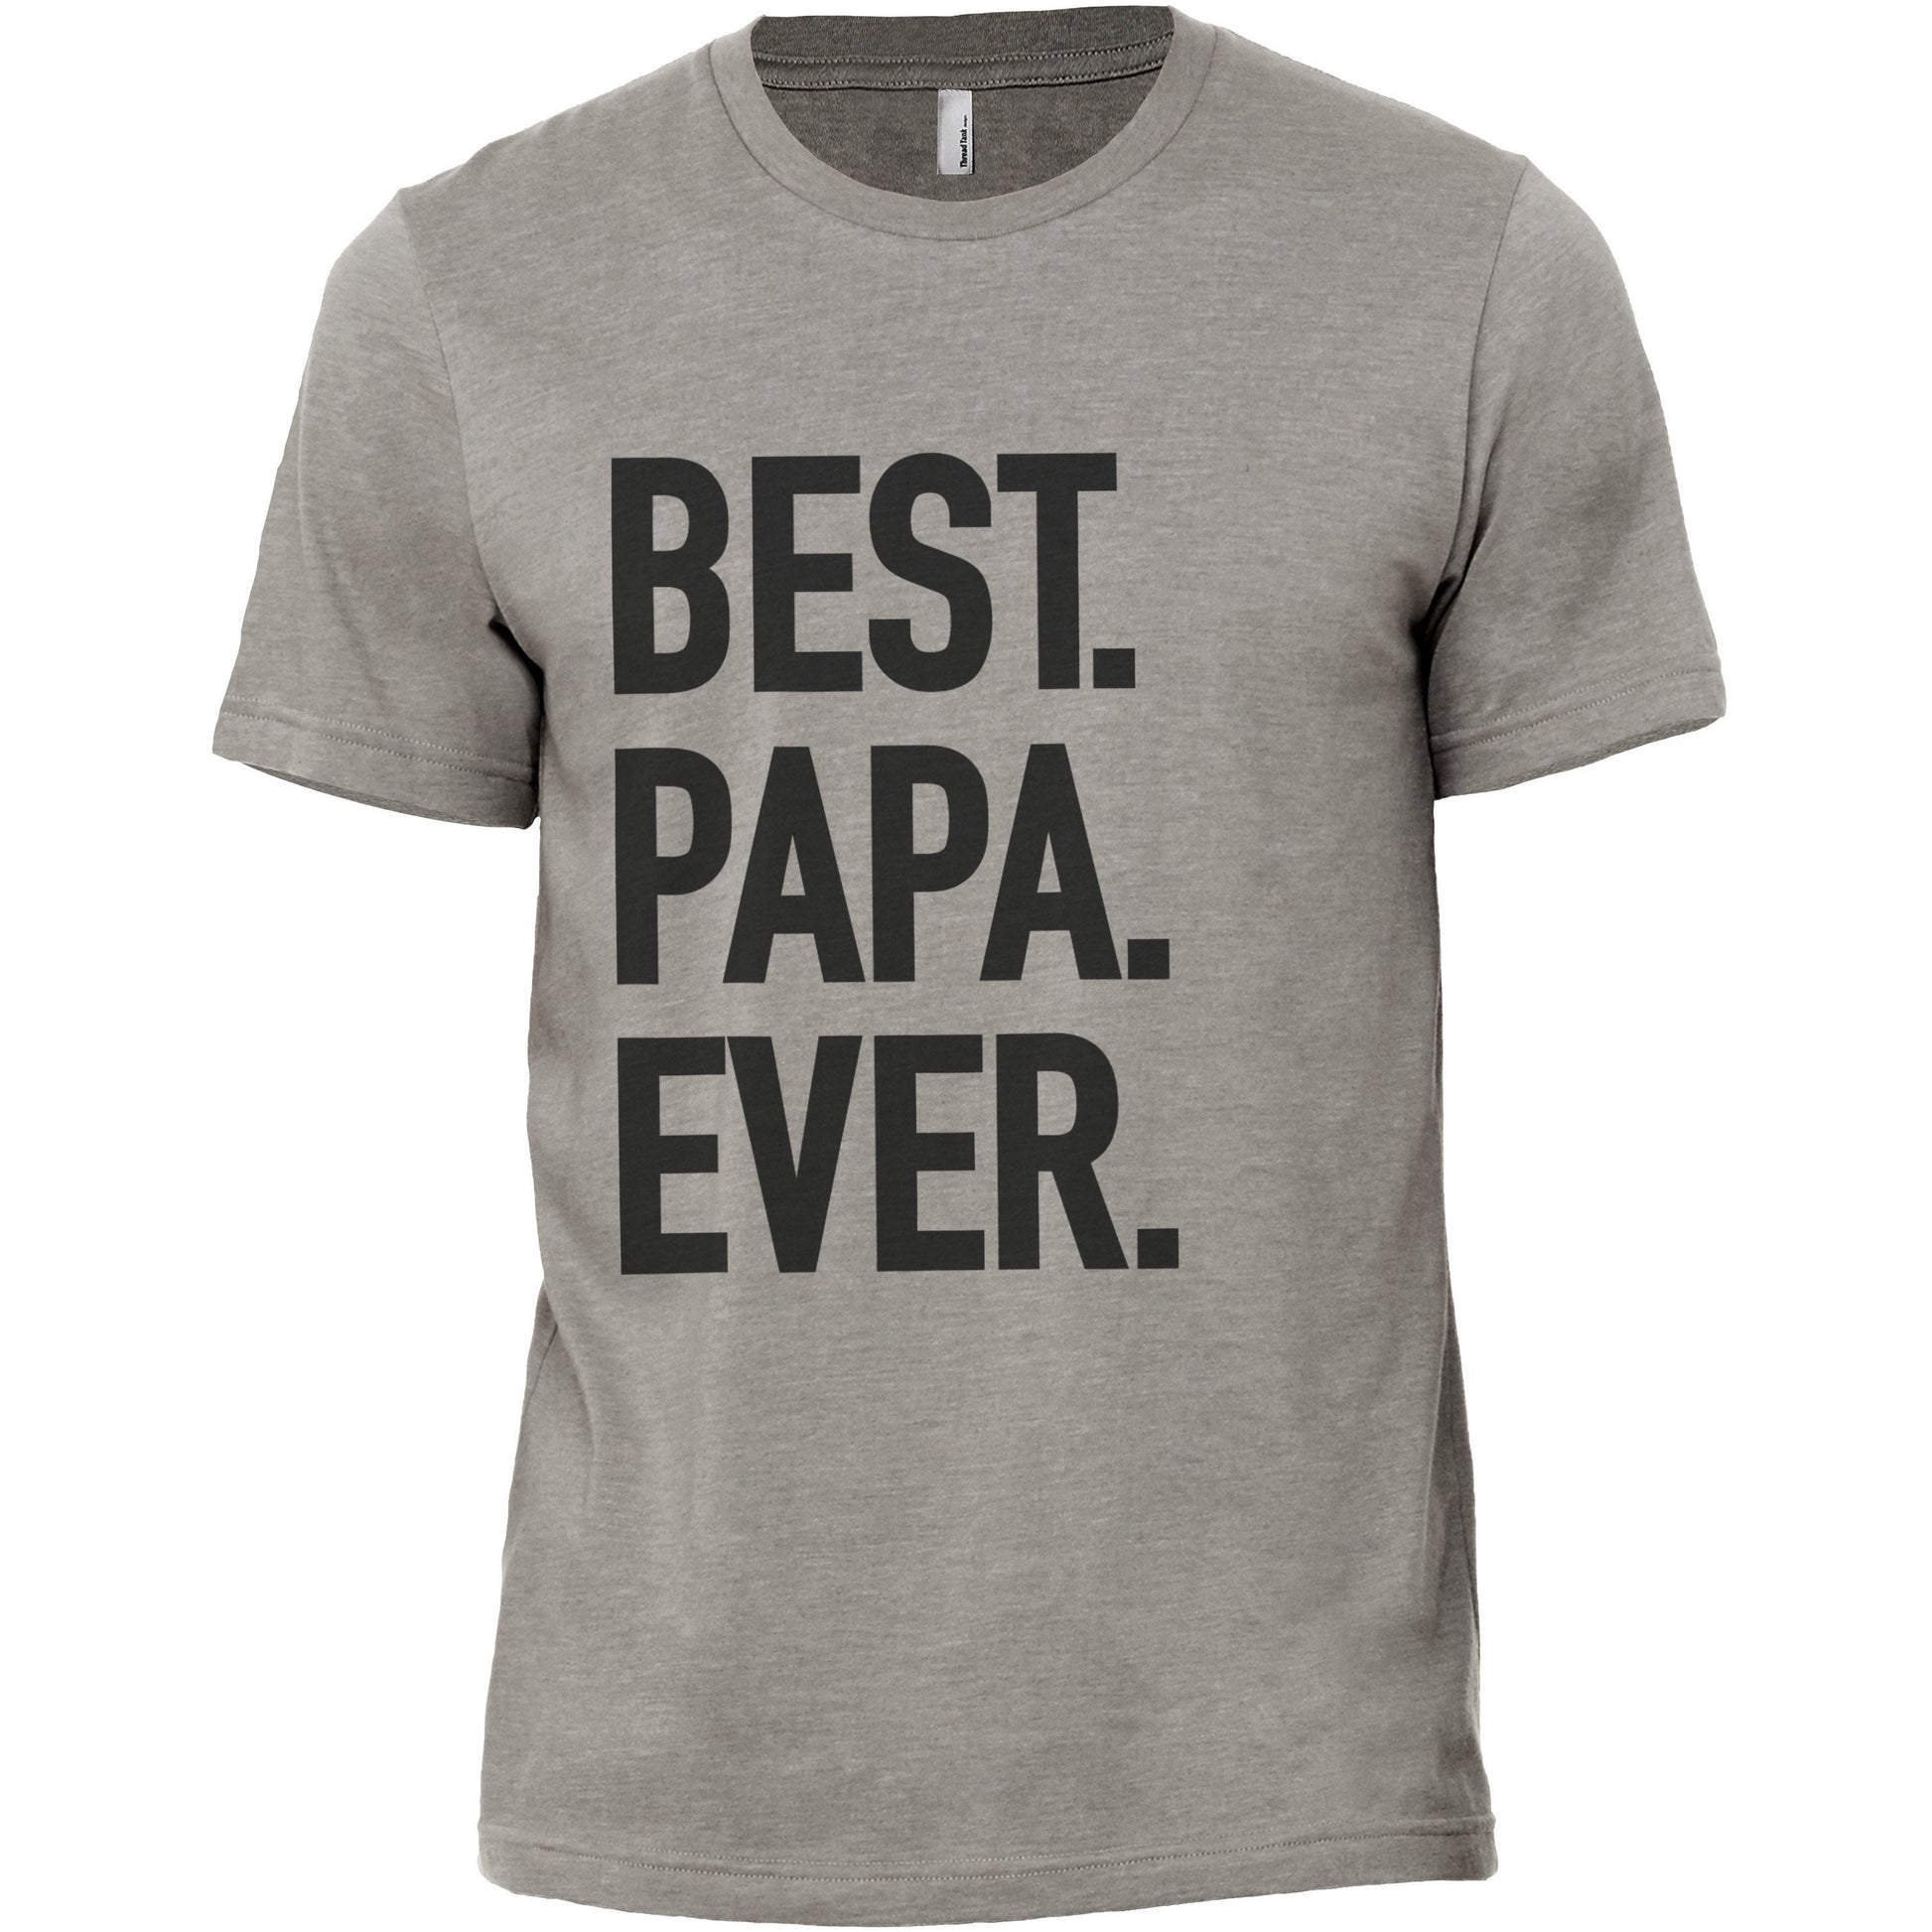 Best Papa Ever Military Grey Printed Graphic Men's Crew T-Shirt Tee